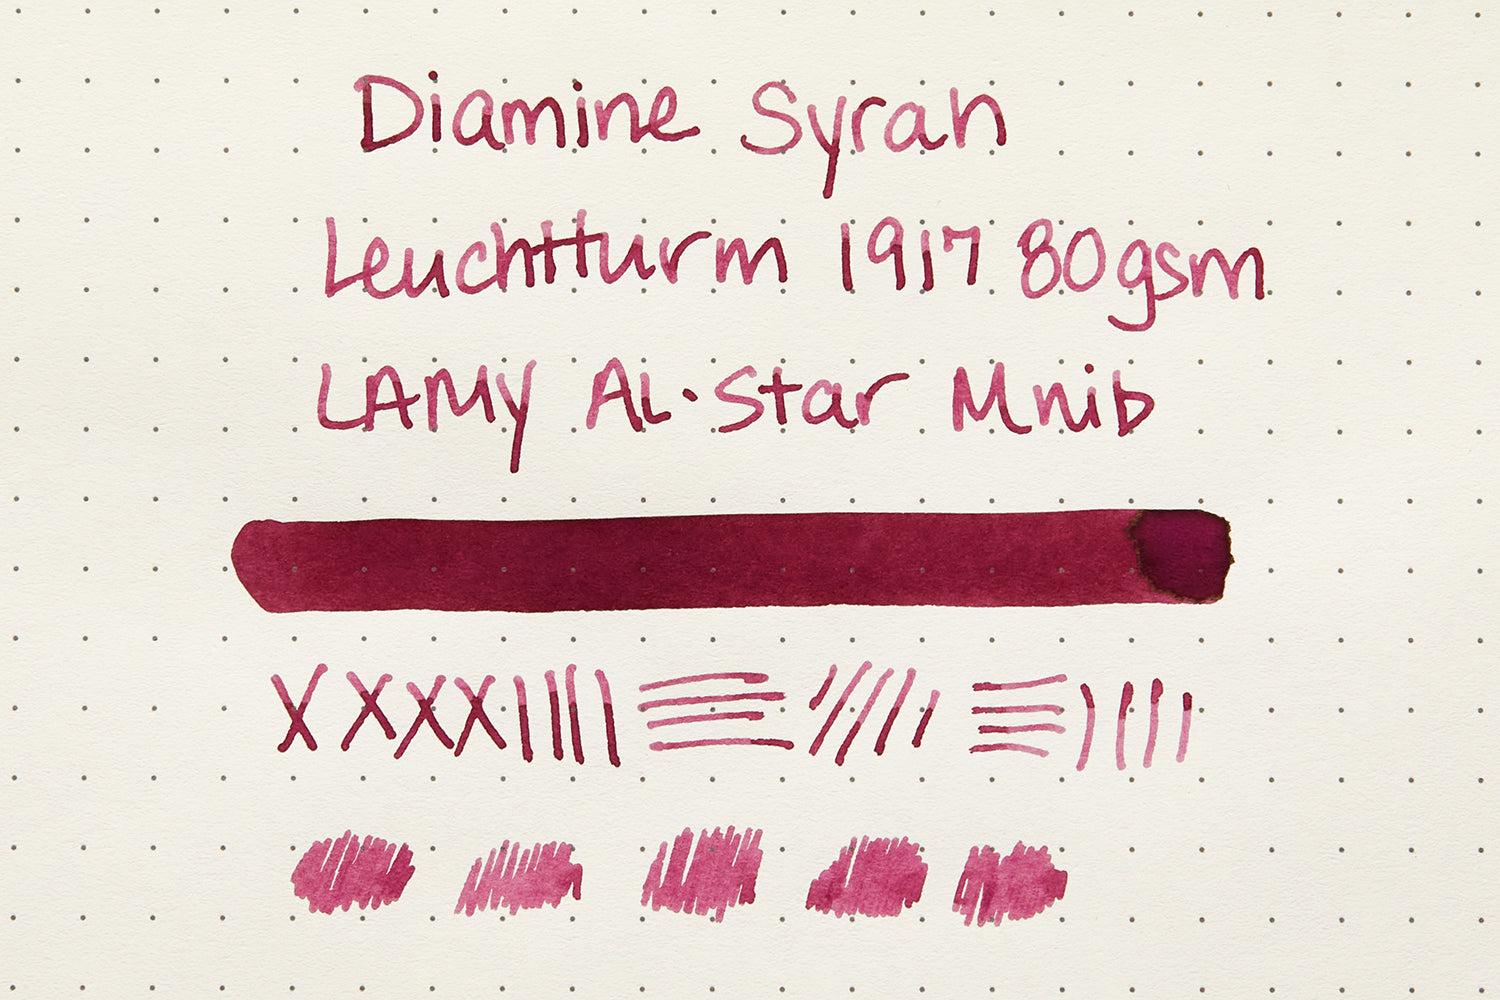 Diamine Syrah fountain pen ink writing sample on cream colored dot grid paper